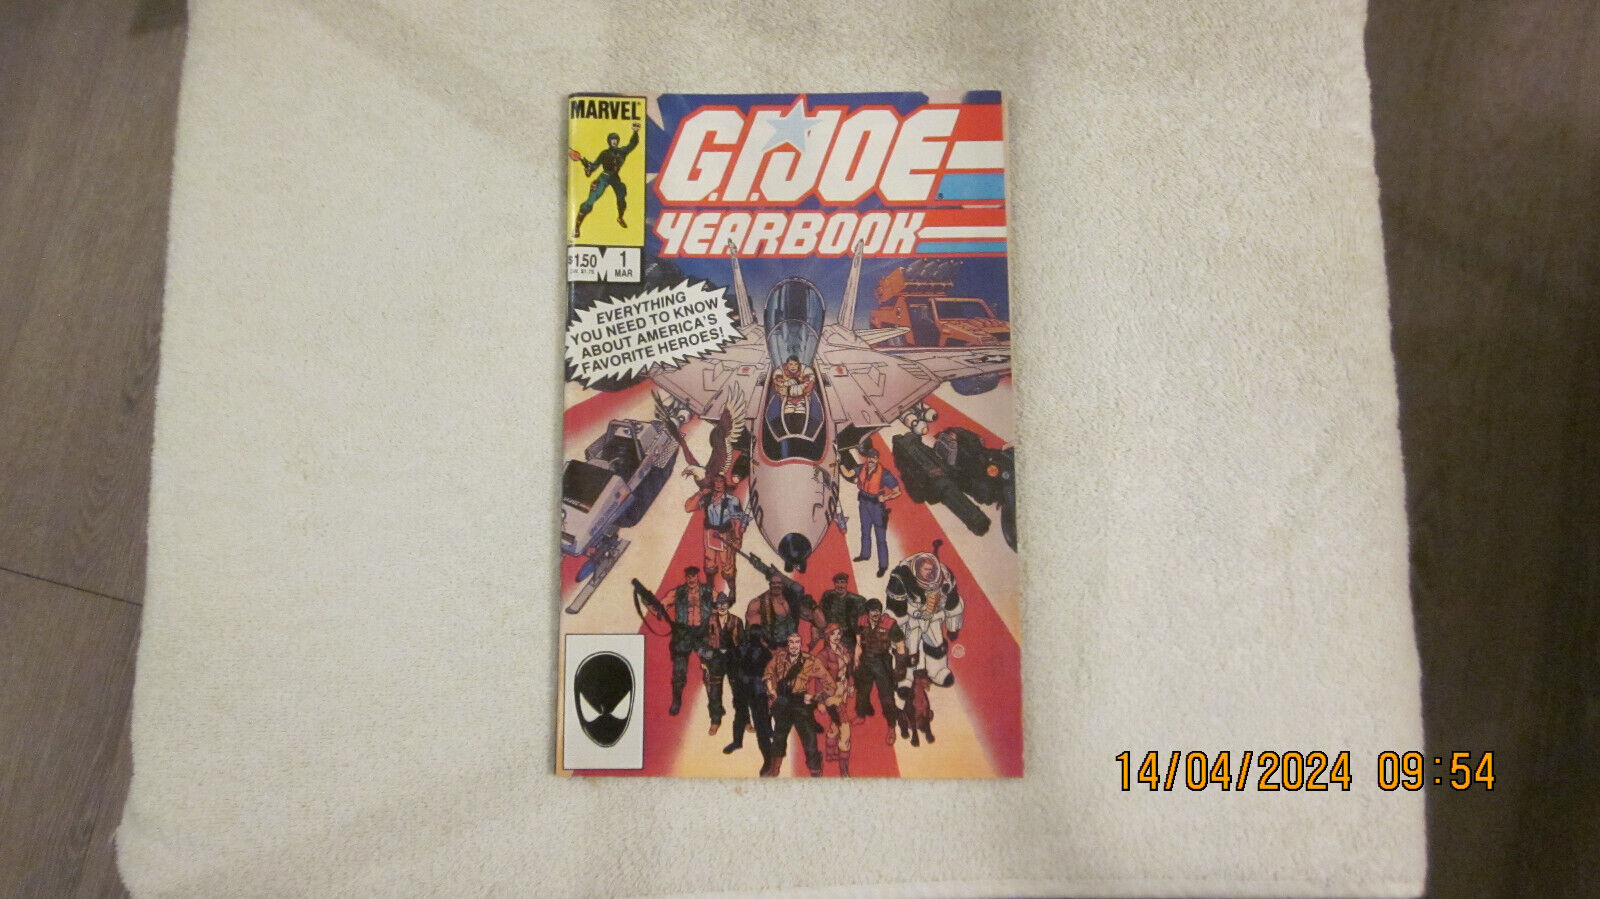 VINTAGE MARVEL COMICS G.I. JOE YEARBOOK #1 MAR 1985 NM 9.4